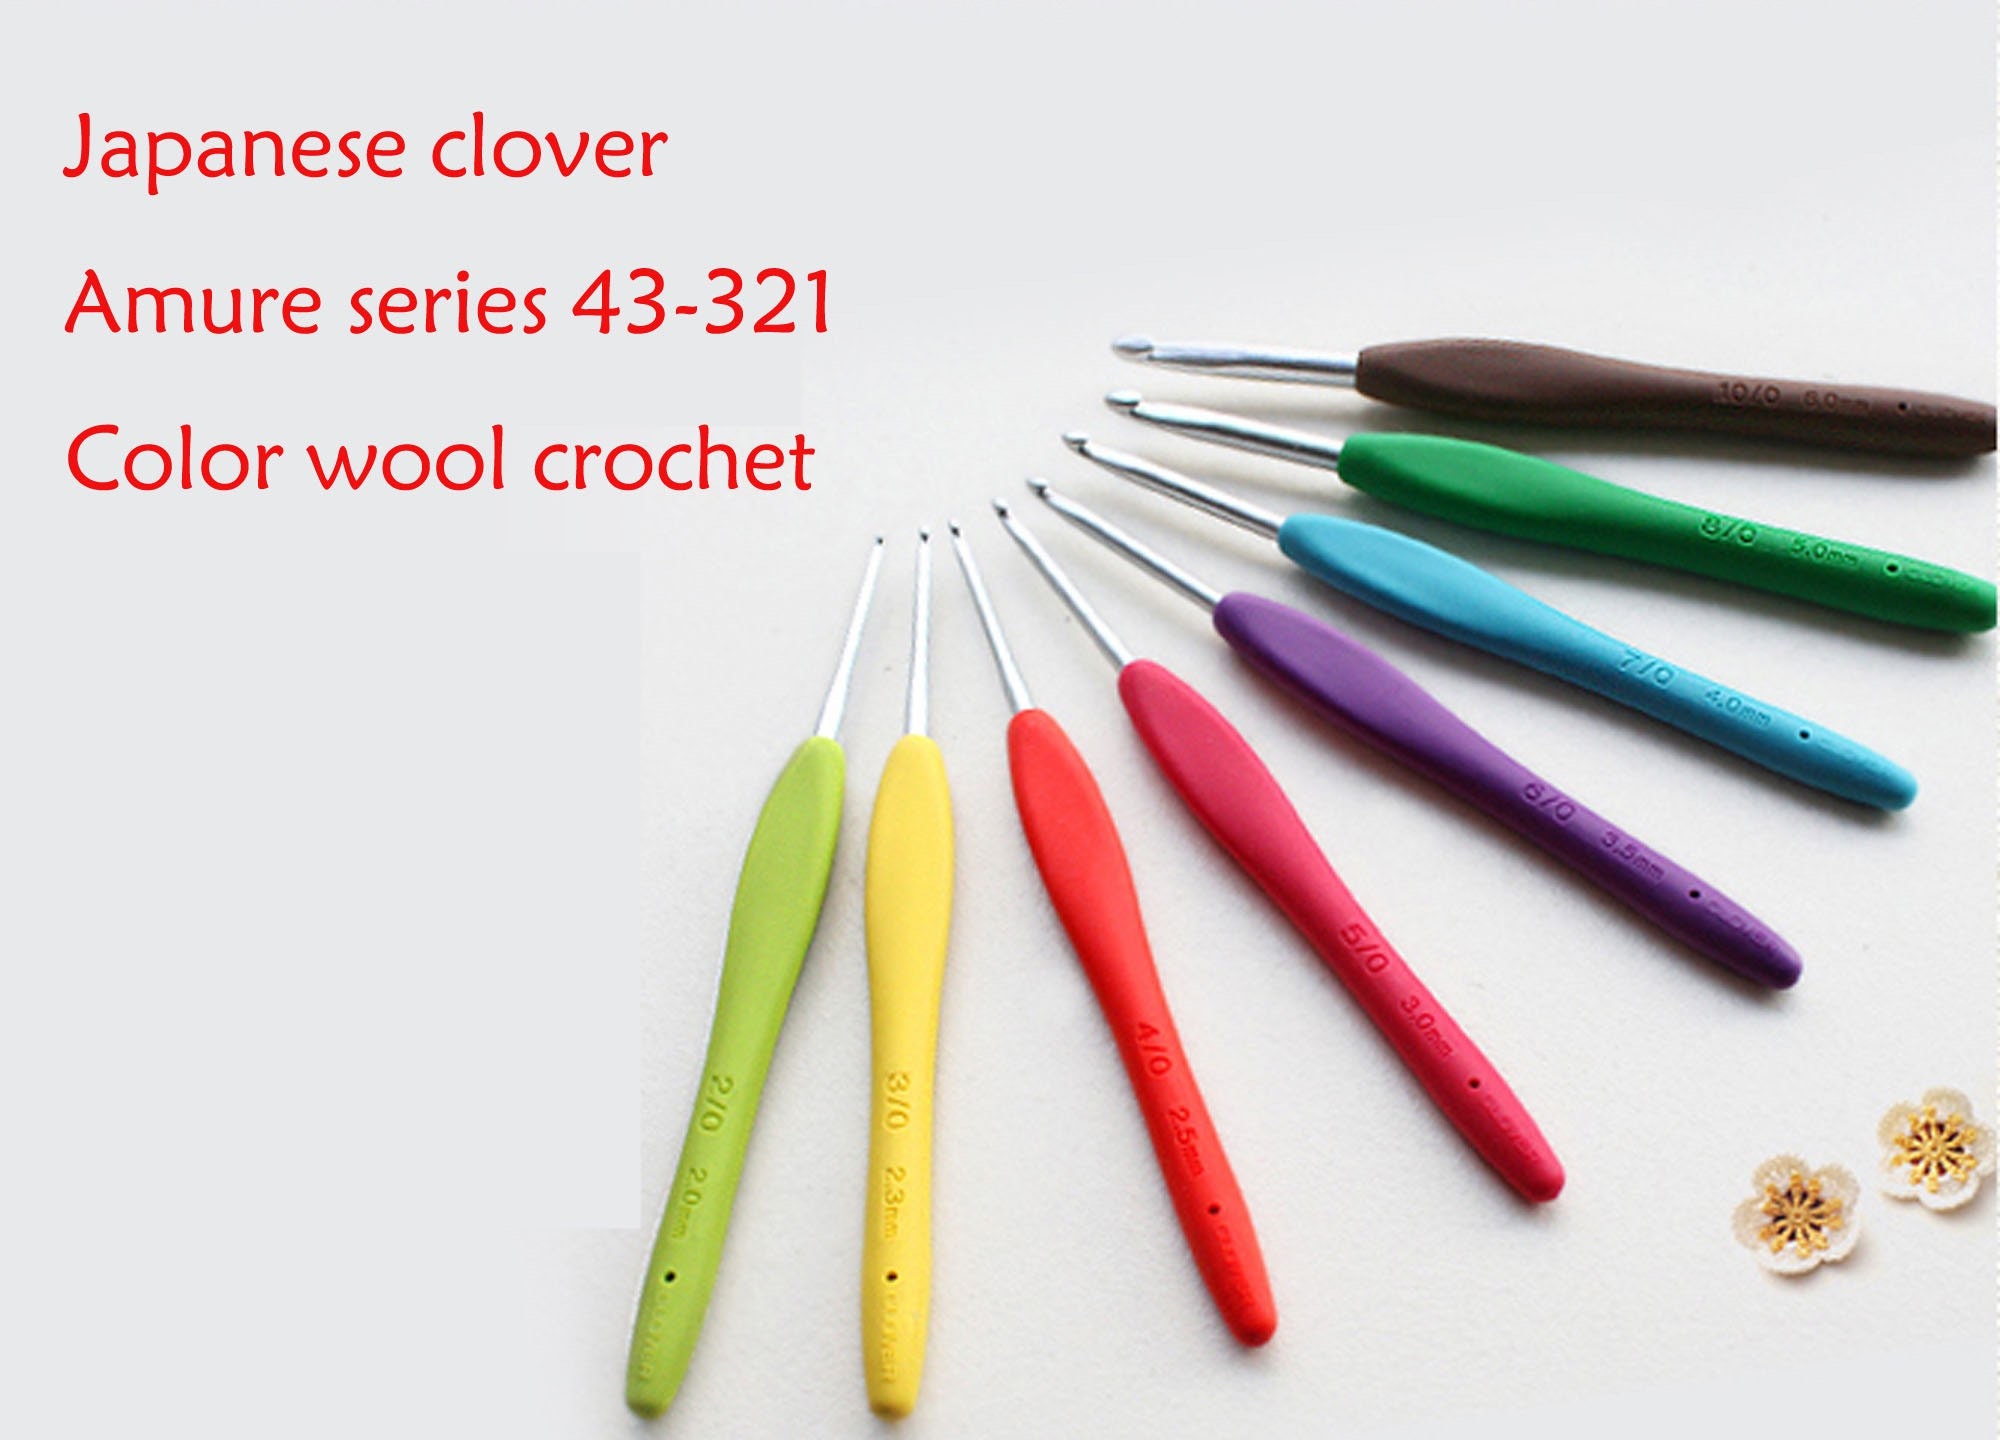 Clover Hook crochet needle Set 8 pcs Amure Japan 43-321